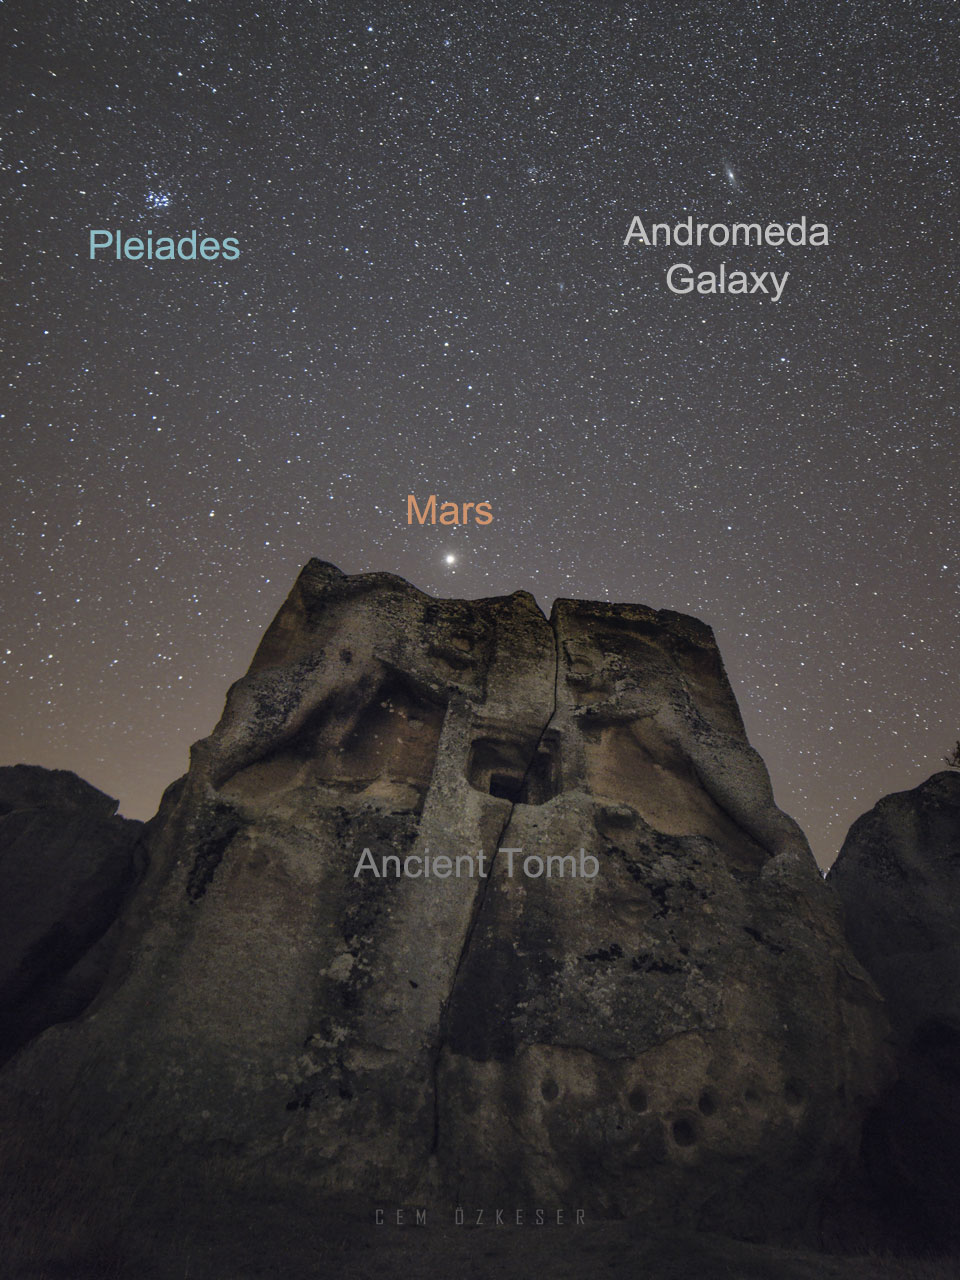 201013 Mars Pleiades and Andromeda over Stone Lions Cem Ozkeser Günün Astronomi Görseli (APOD/NASA) | 13/10/20